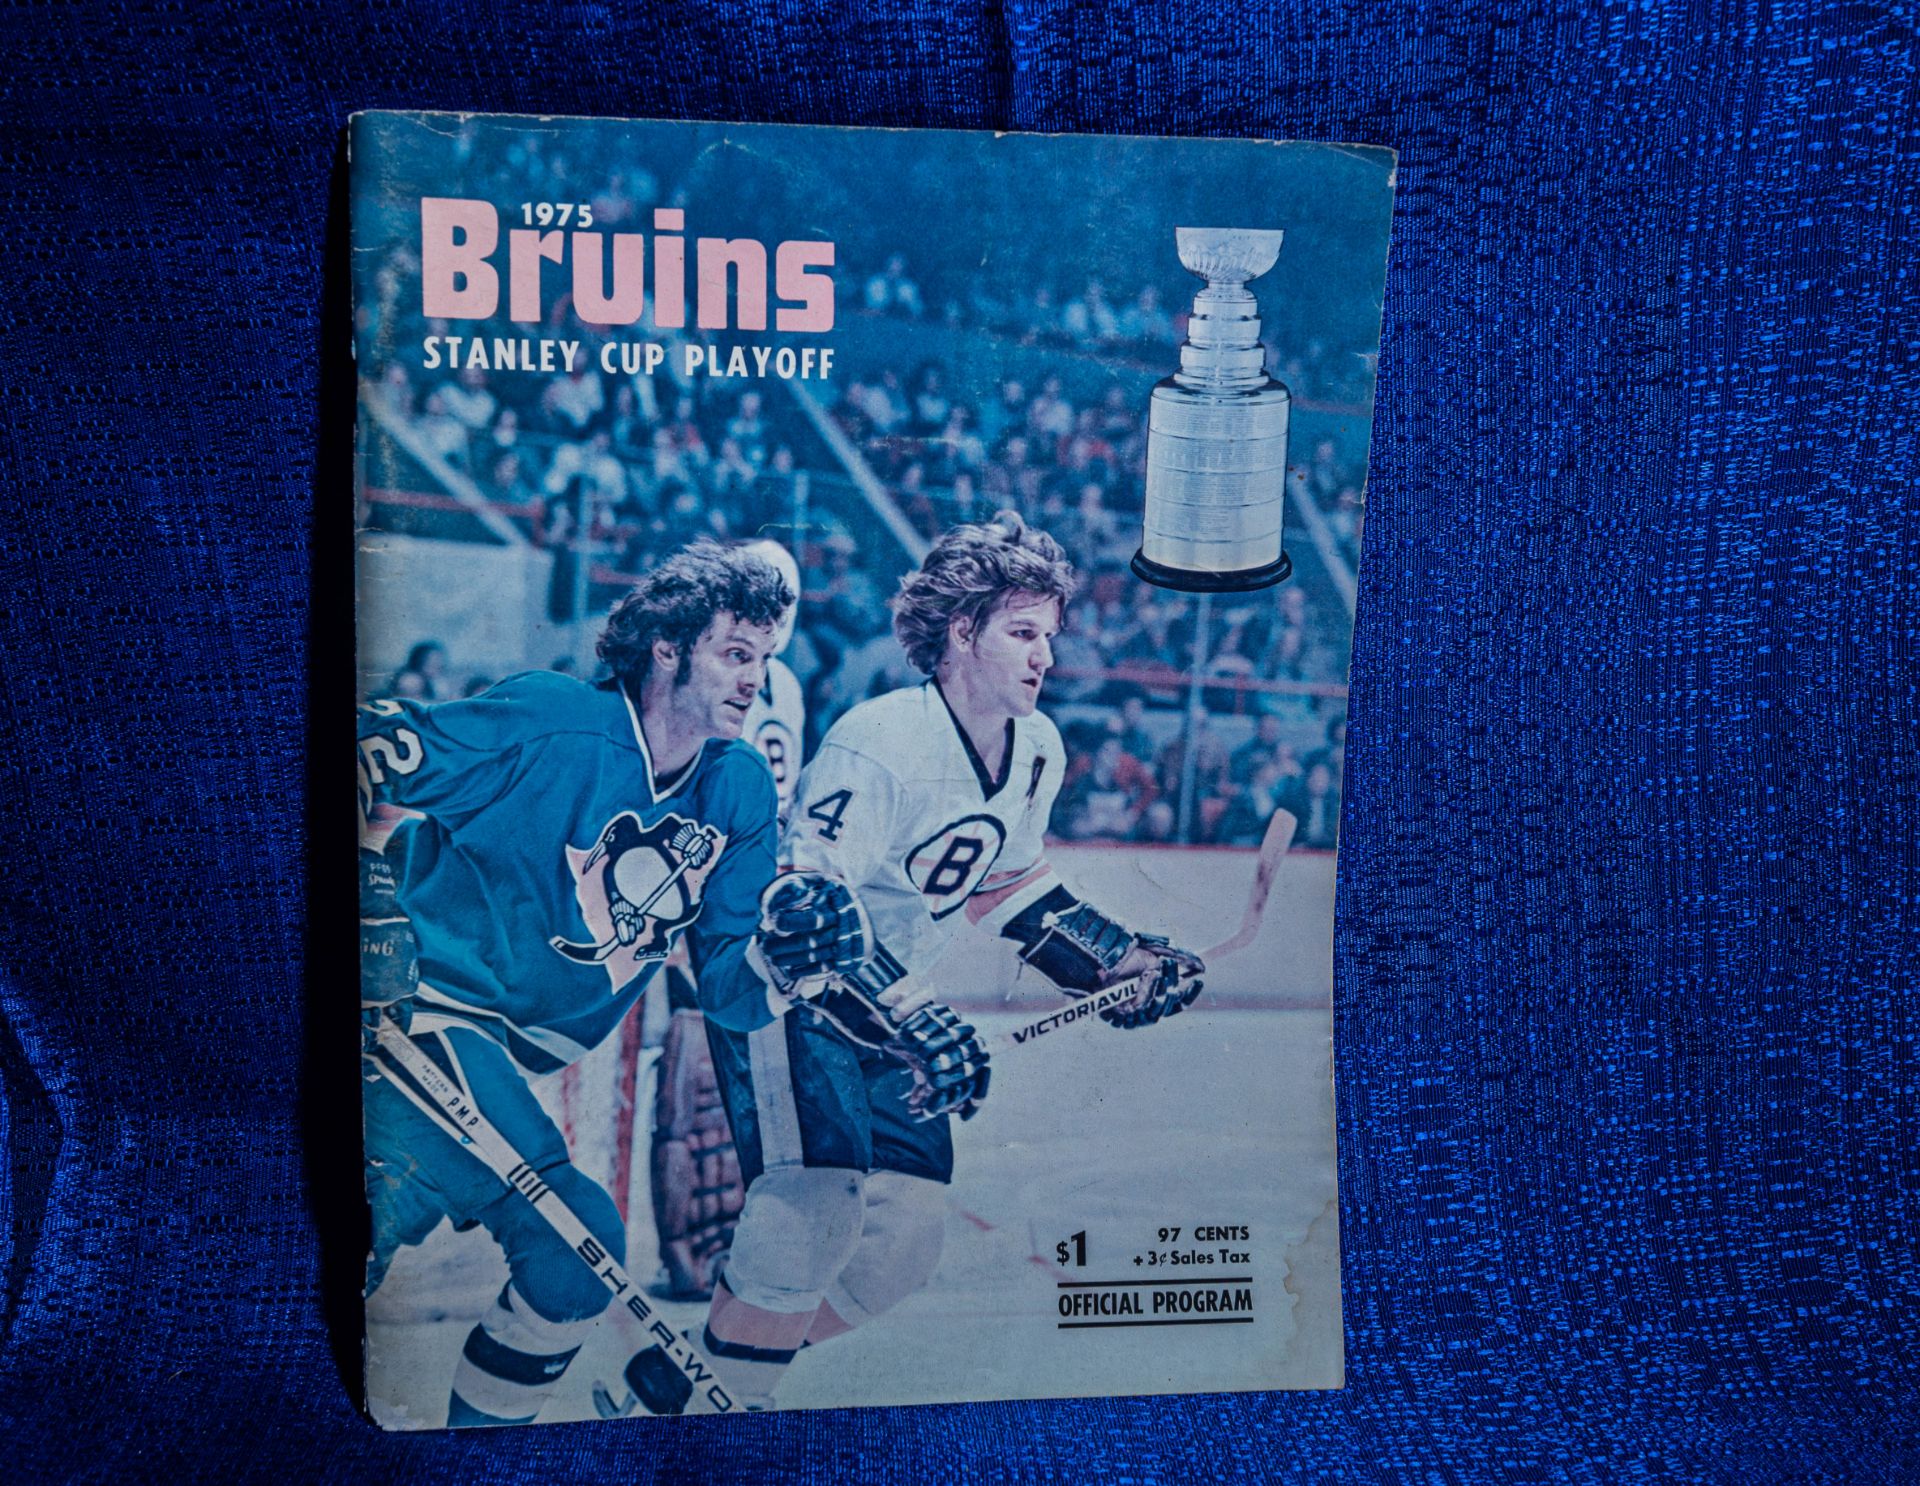 Bruins 1975 Playoff Program